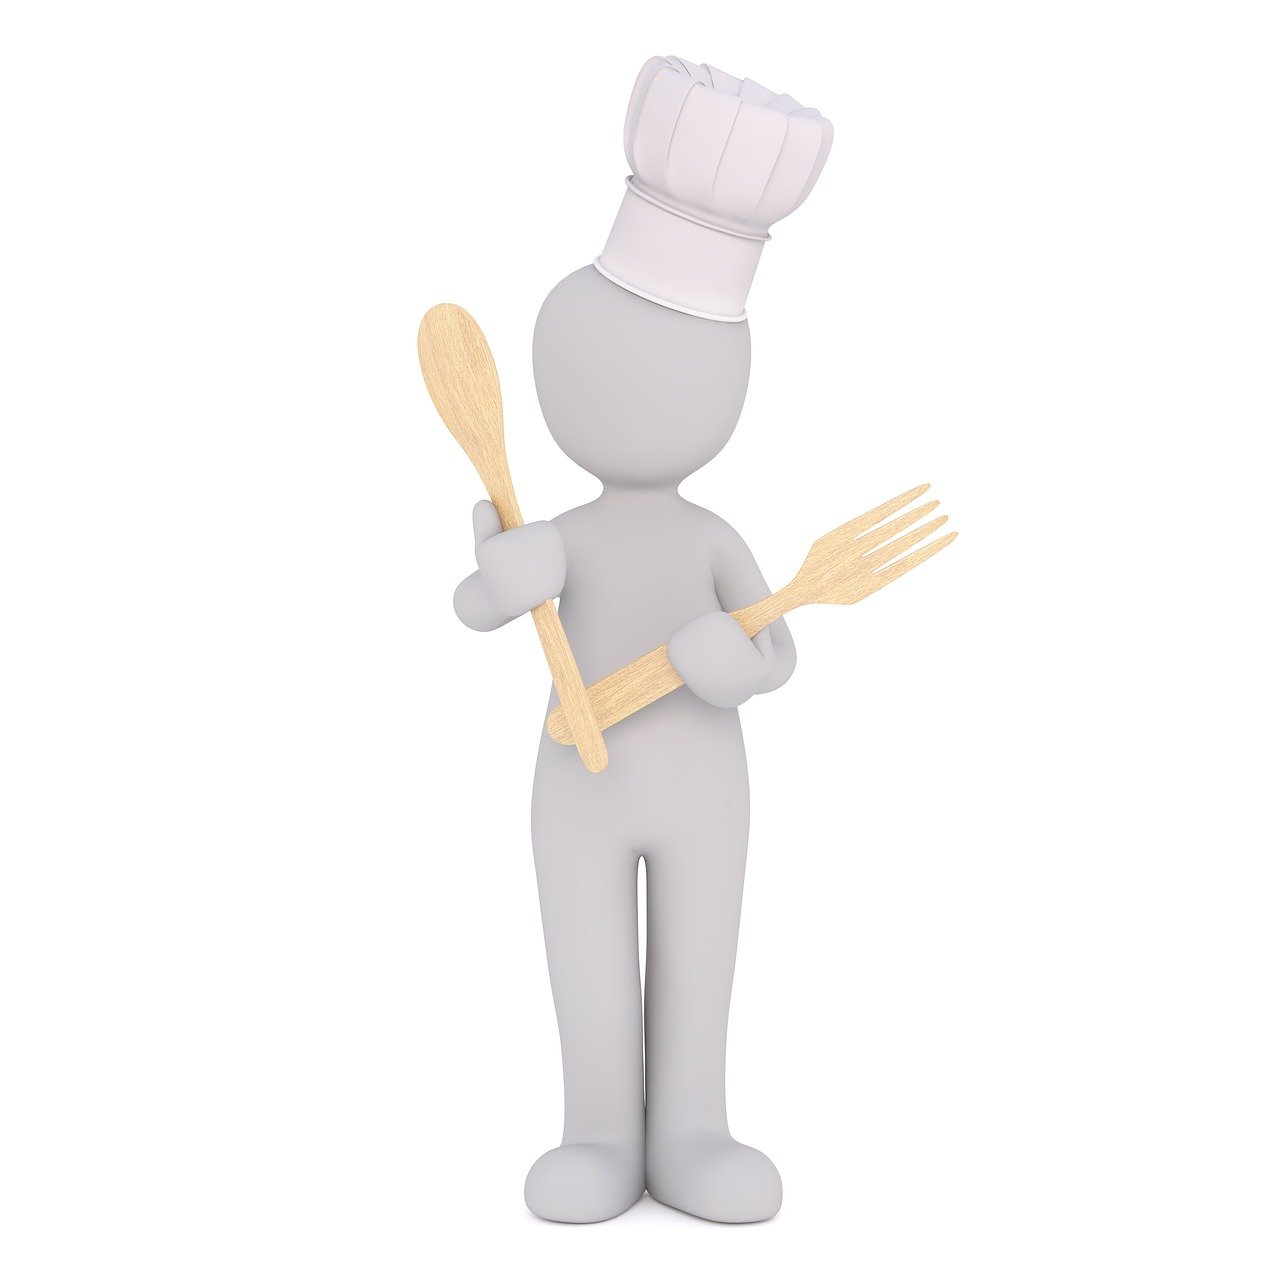 chef-1816252_1280 (c) pixabay